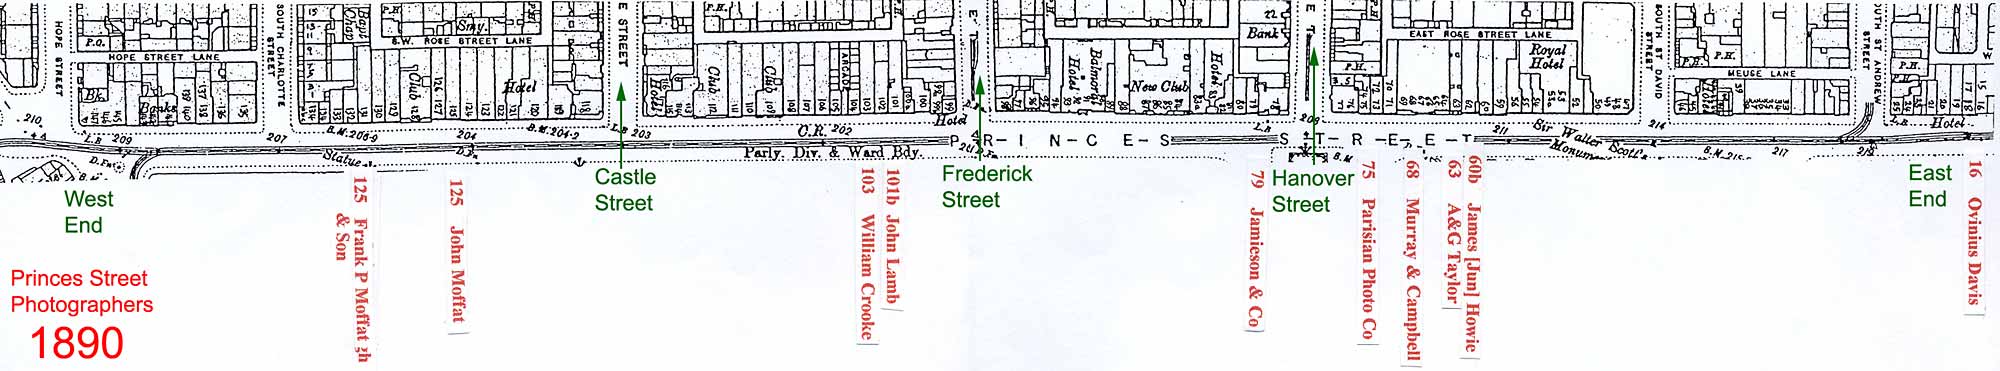 Map of Princes Street studios in 1890